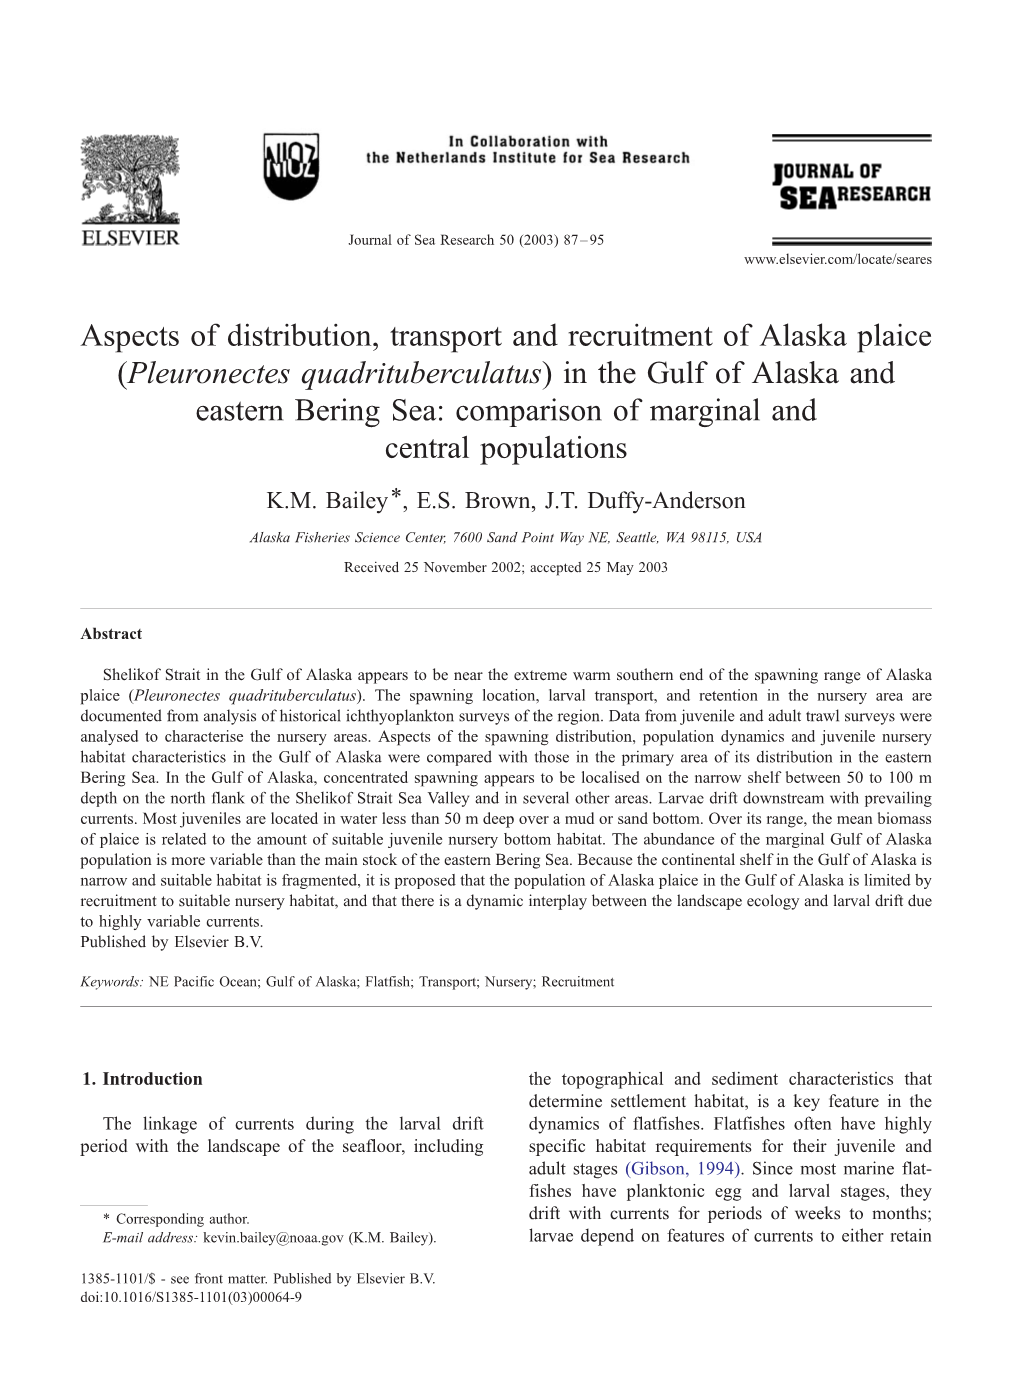 Aspects of Distribution, Transport and Recruitment of Alaska Plaice